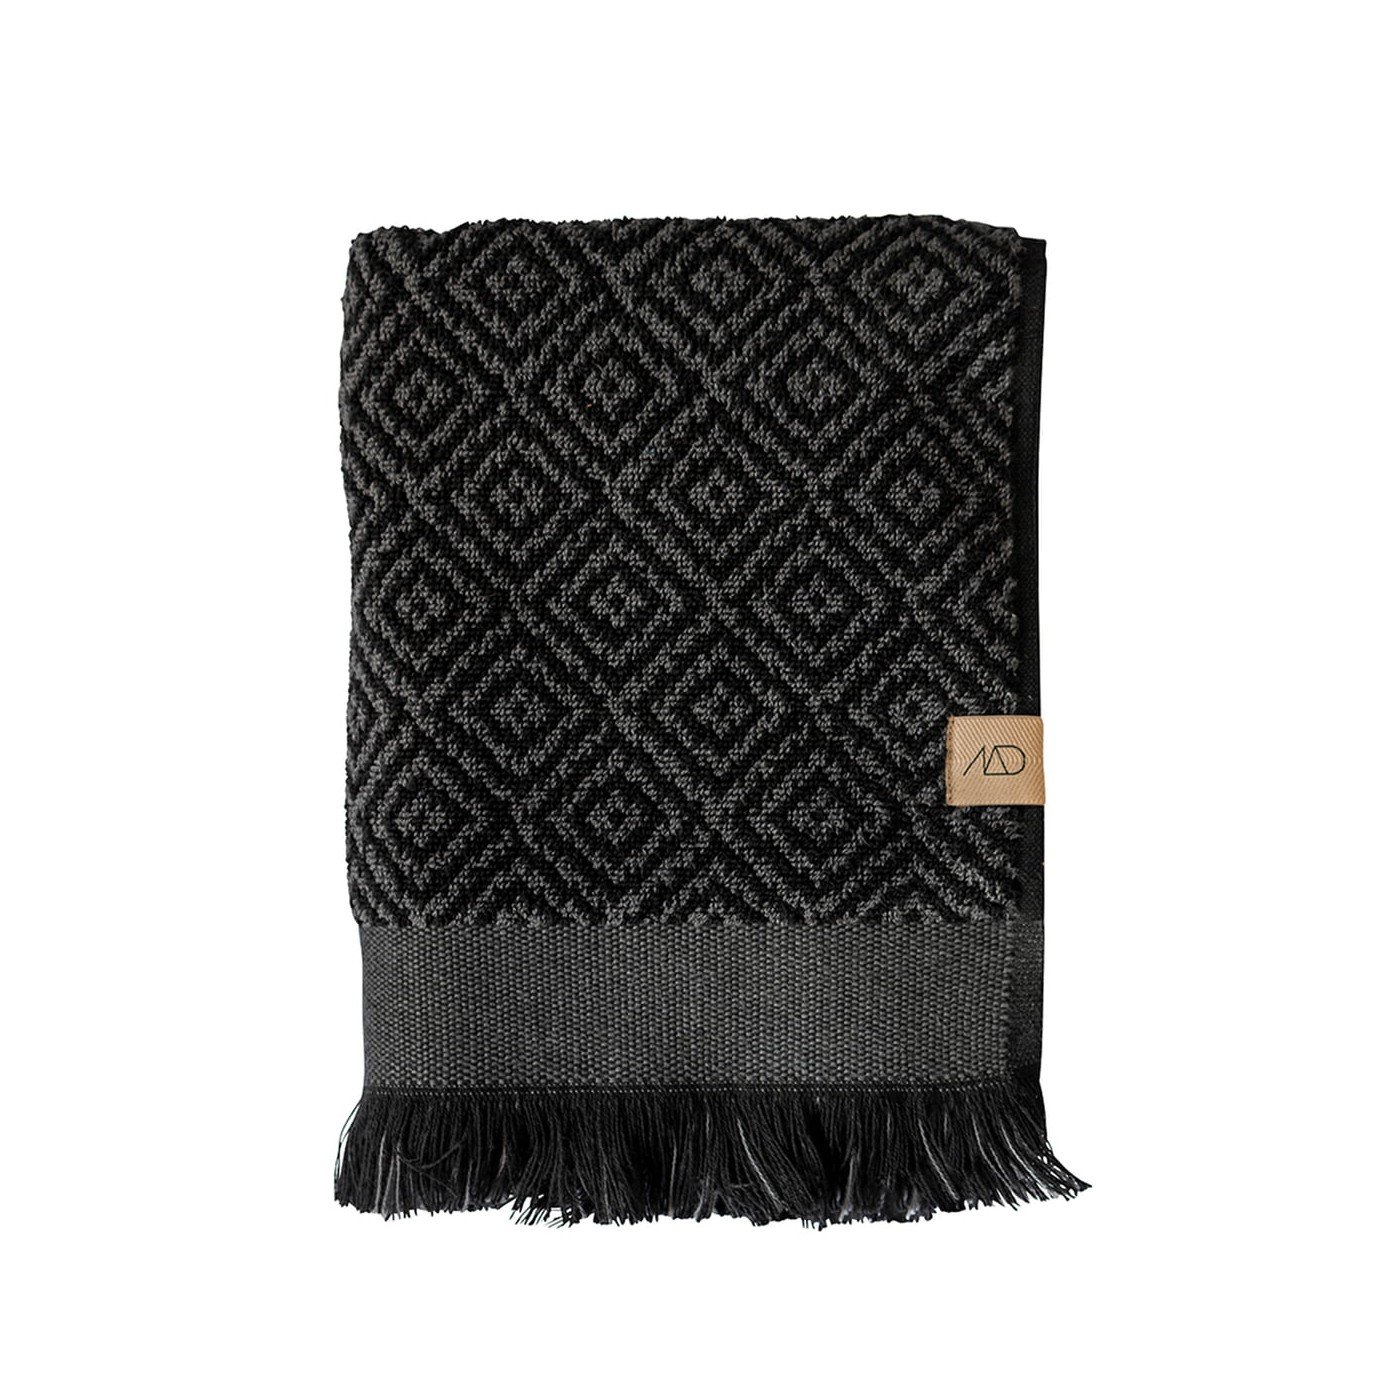 Mette Ditmer - Morocco Guest Towel 35 x 60 cm - Black / Grey